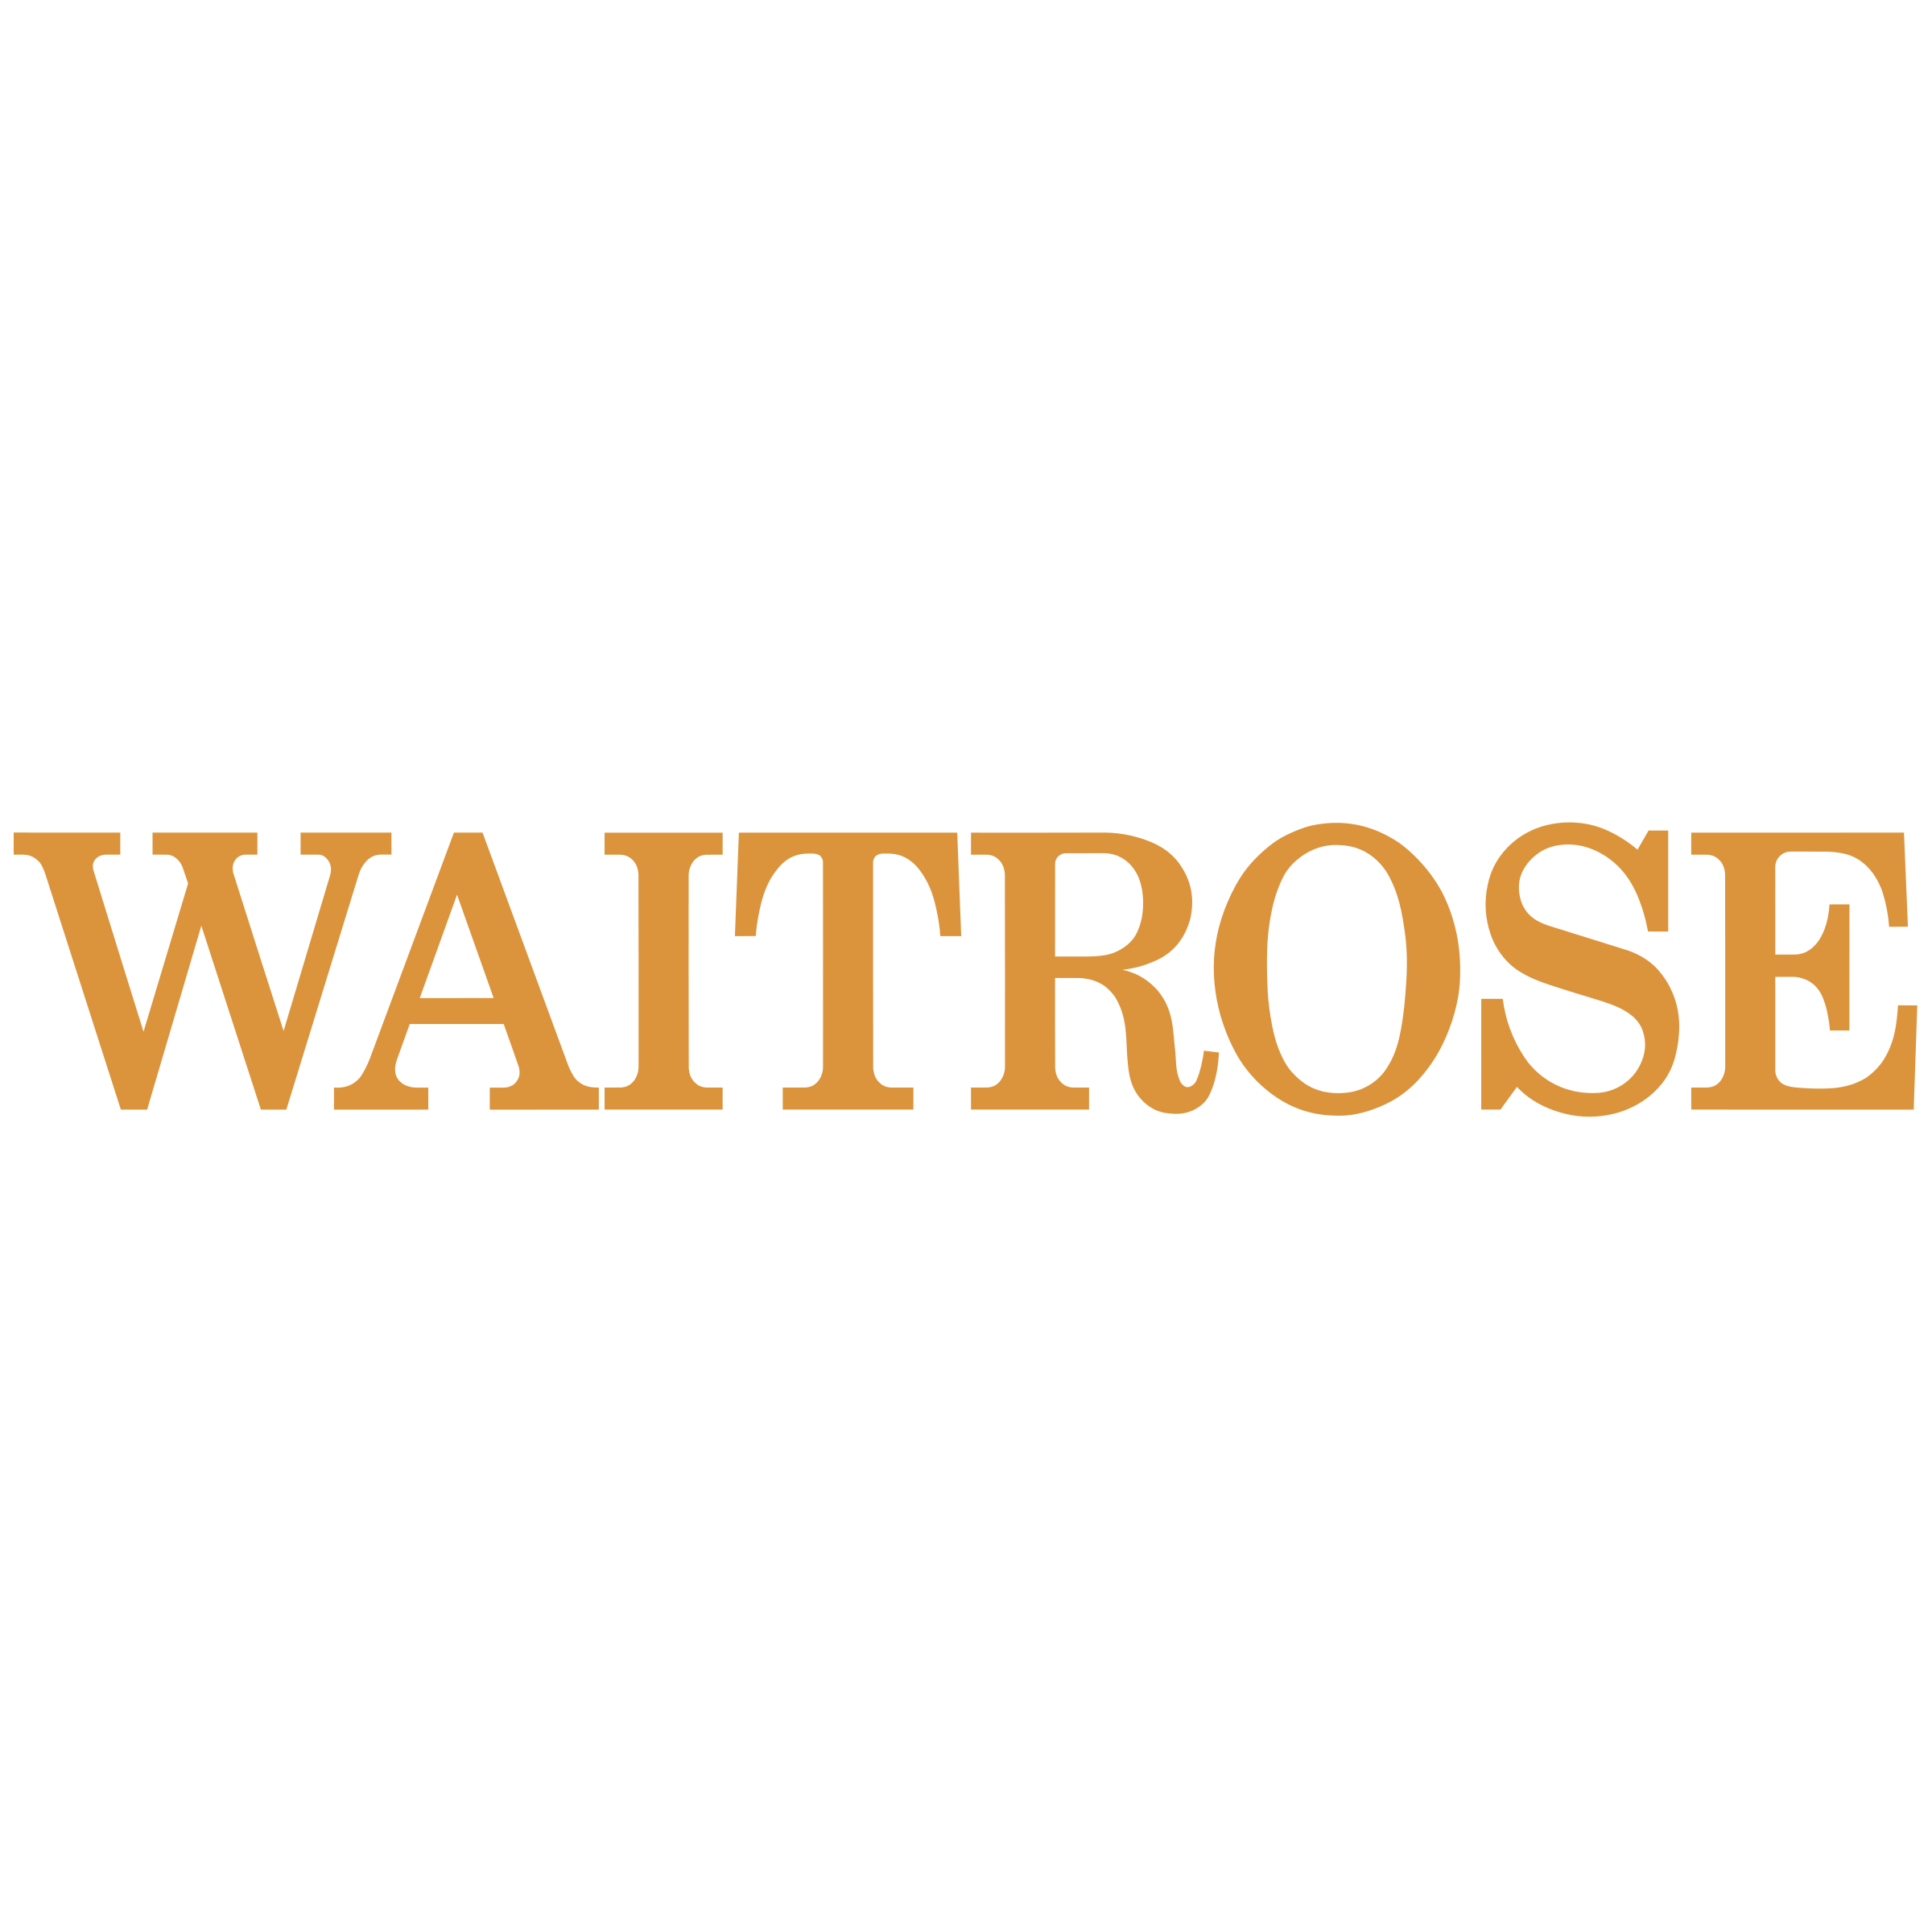 Waitrose Logo - Waitrose Logo PNG Transparent & SVG Vector - Freebie Supply